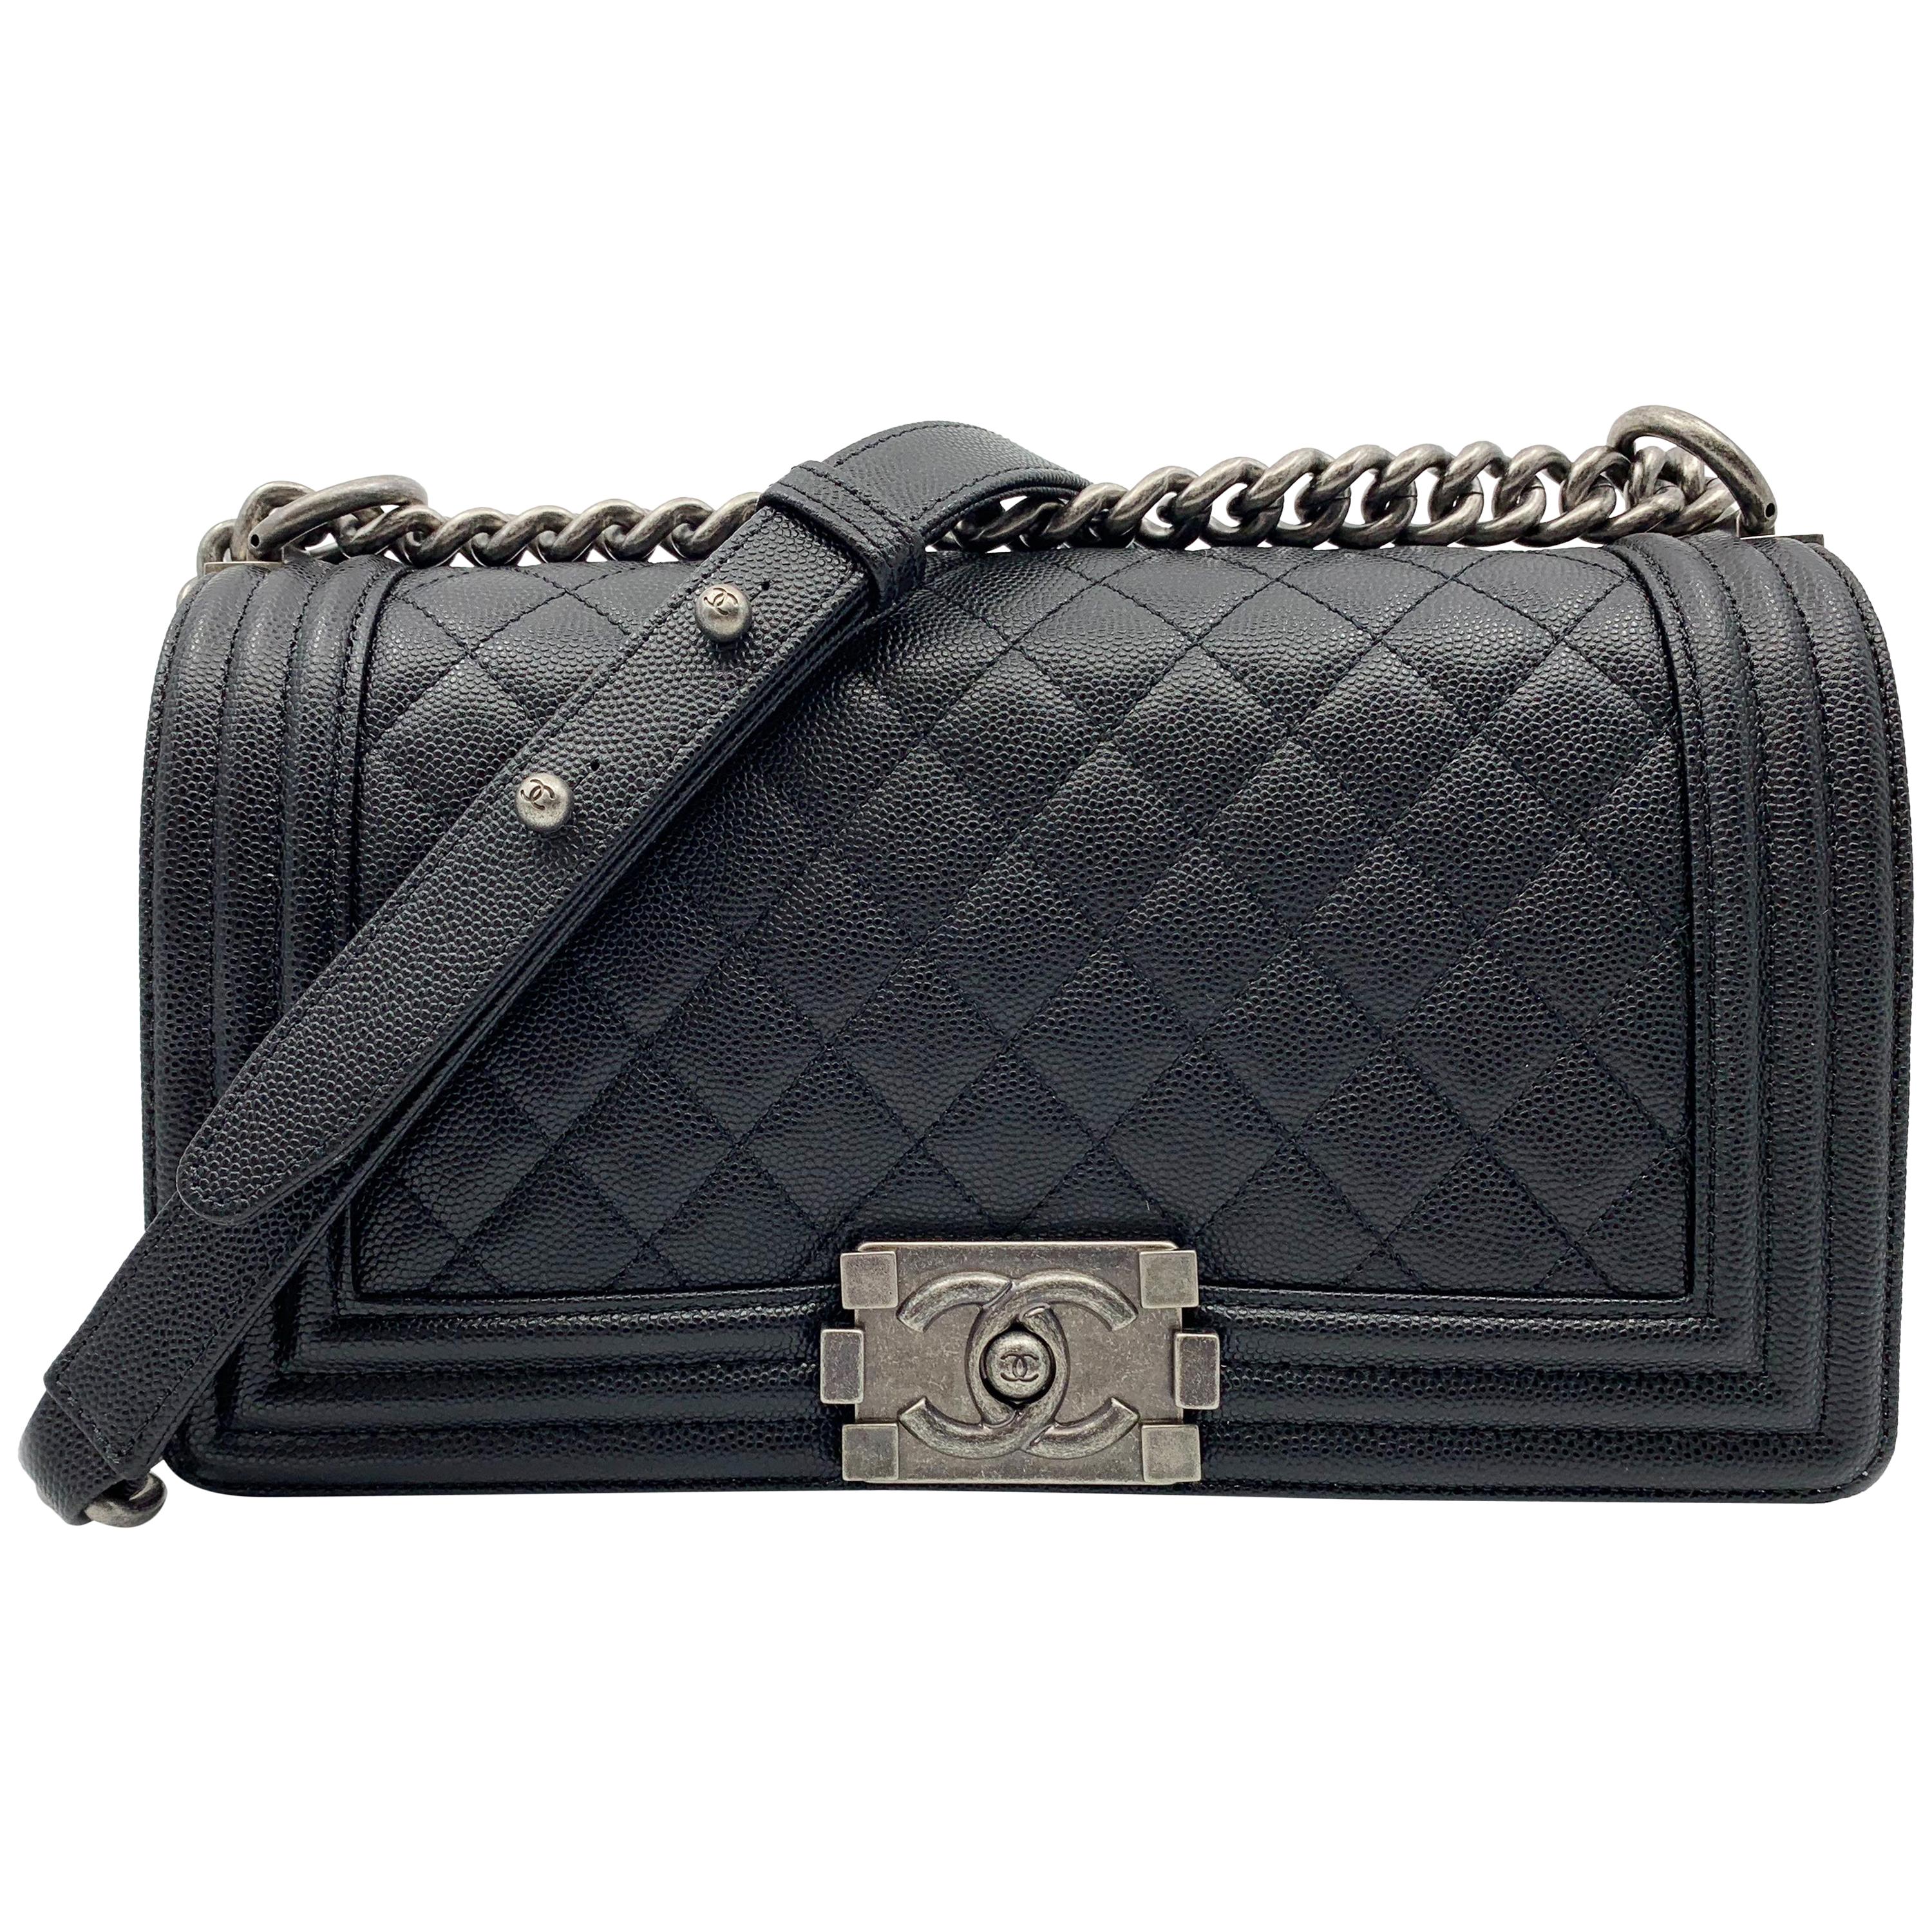 Chanel Boy Ruthenium Finish Medium Black Quilted Leather Bag A67086 Y83338 94305